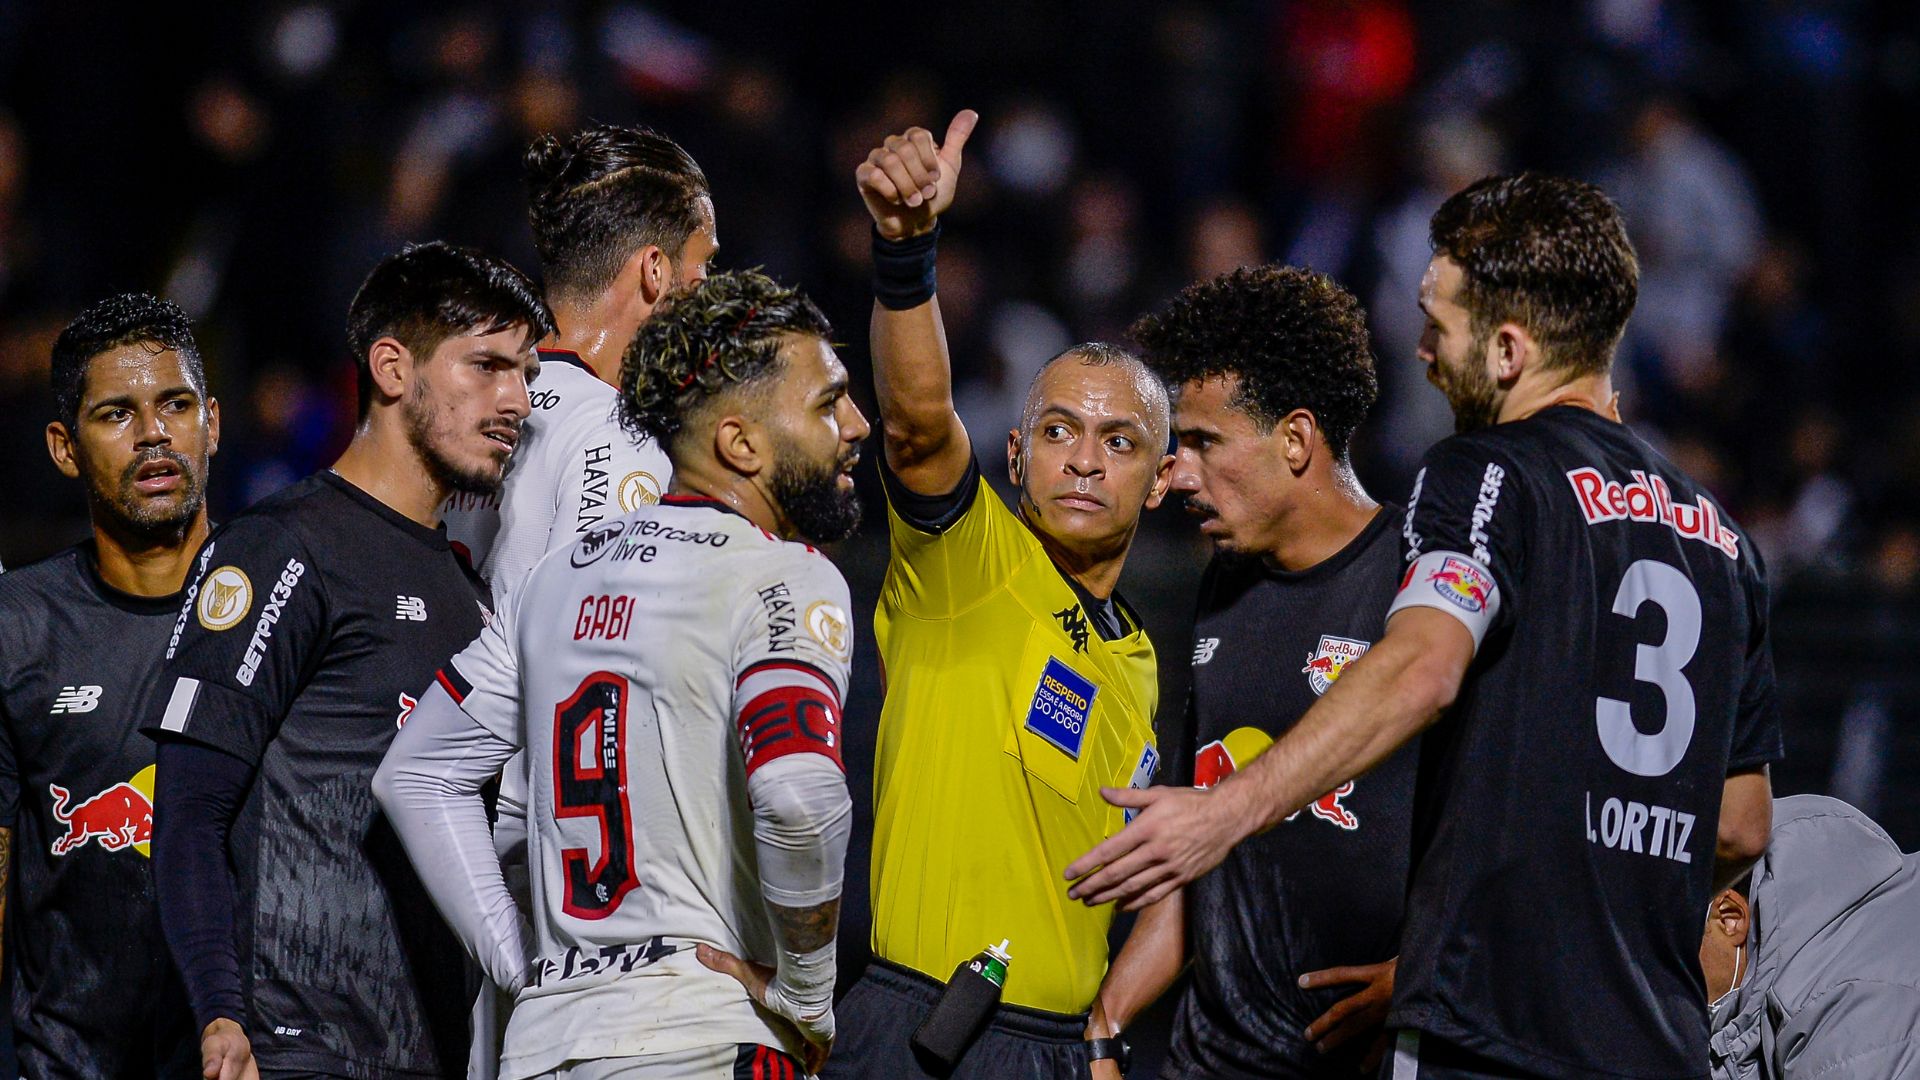 Os últimos 10 jogos entre RB Bragantino x Flamengo FlaResenha